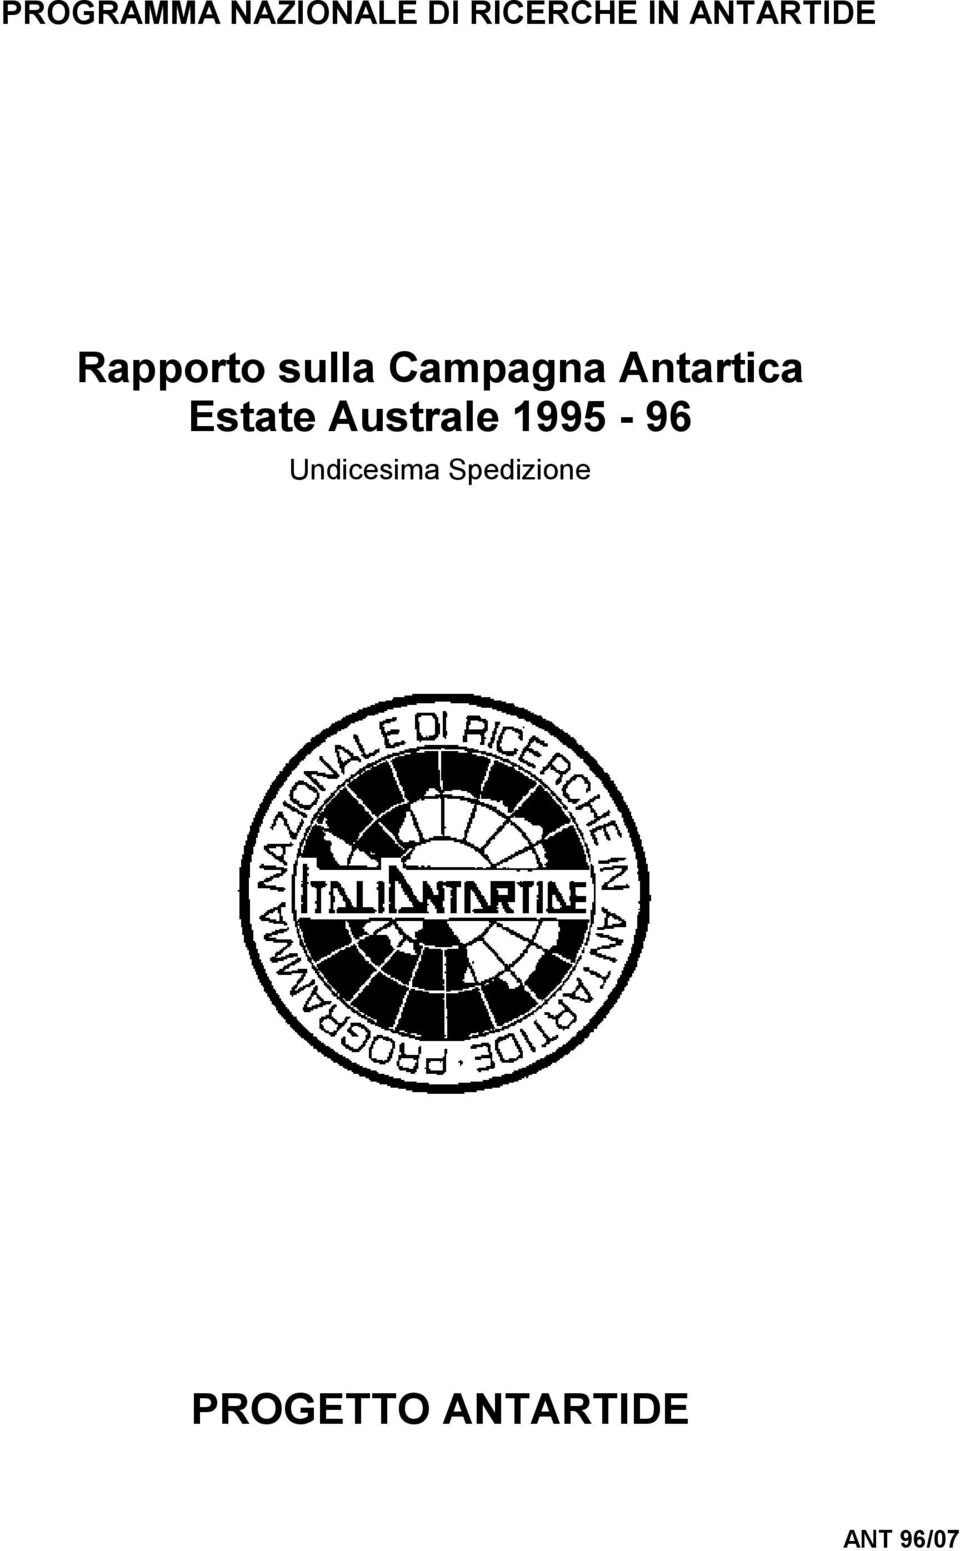 Antartica Estate Australe 1995-96